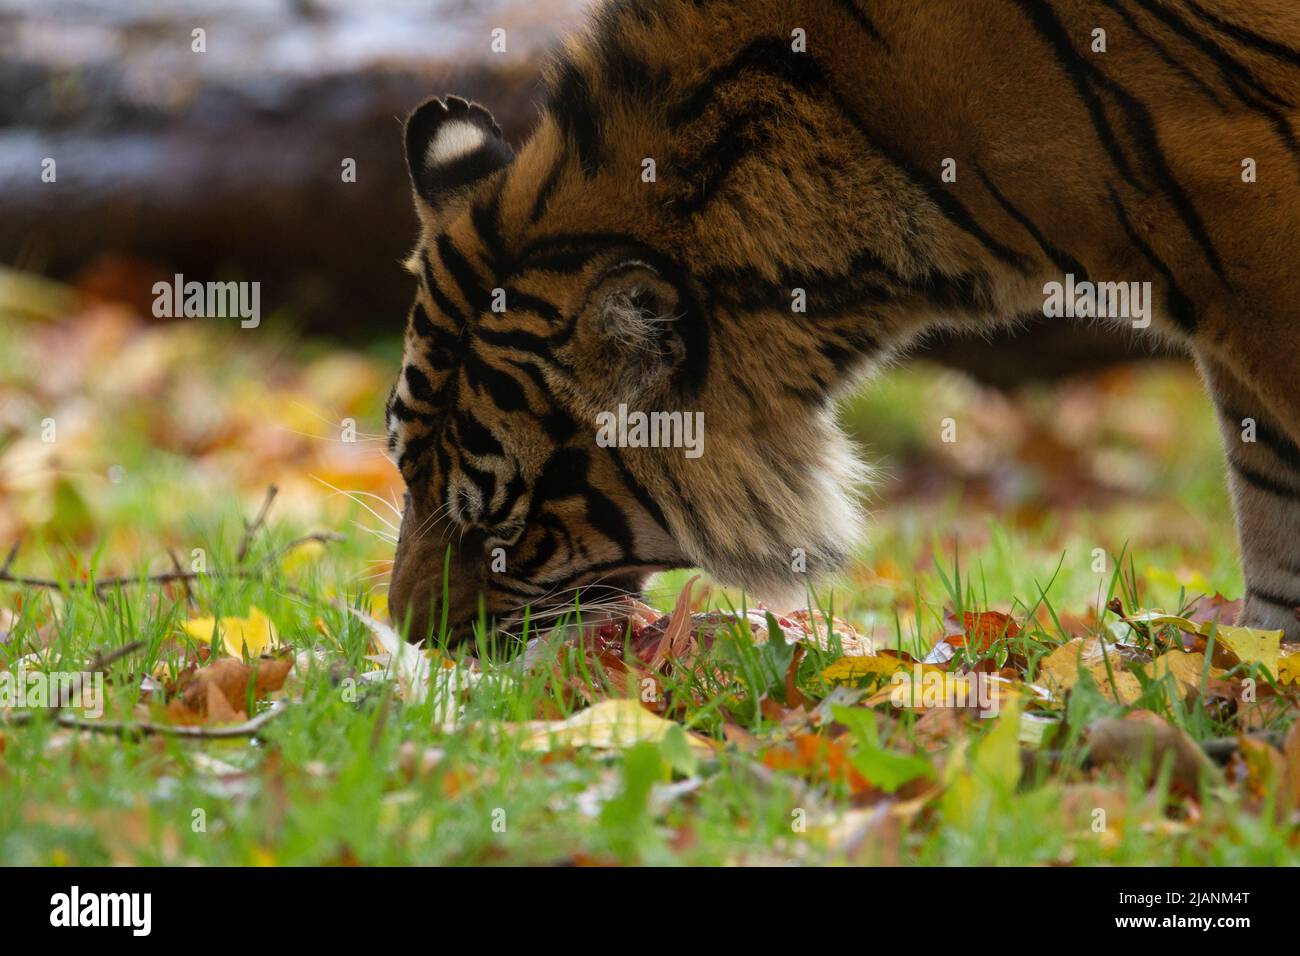 Tigre de Sumatra (Panthera tigris sondaica) Un tigre de Sumatra comiendo un pollo muerto Foto de stock